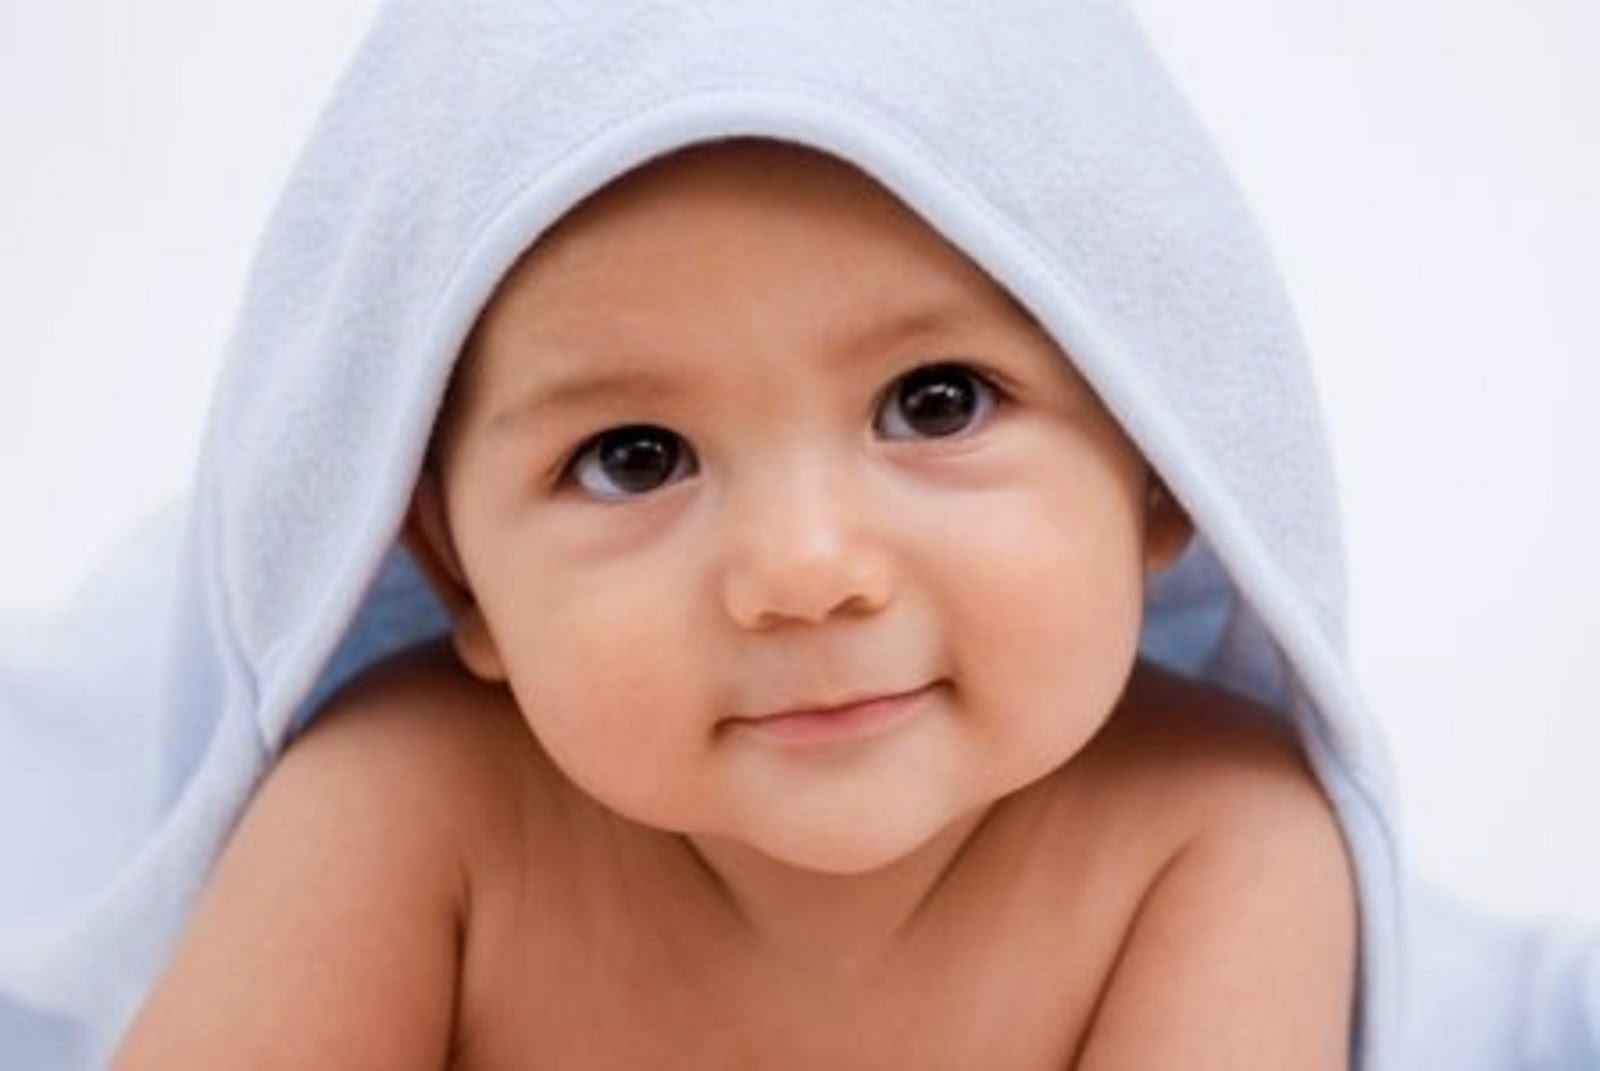 Gambar Anak Bayi Paling Lucu Terlengkap Display Picture Update